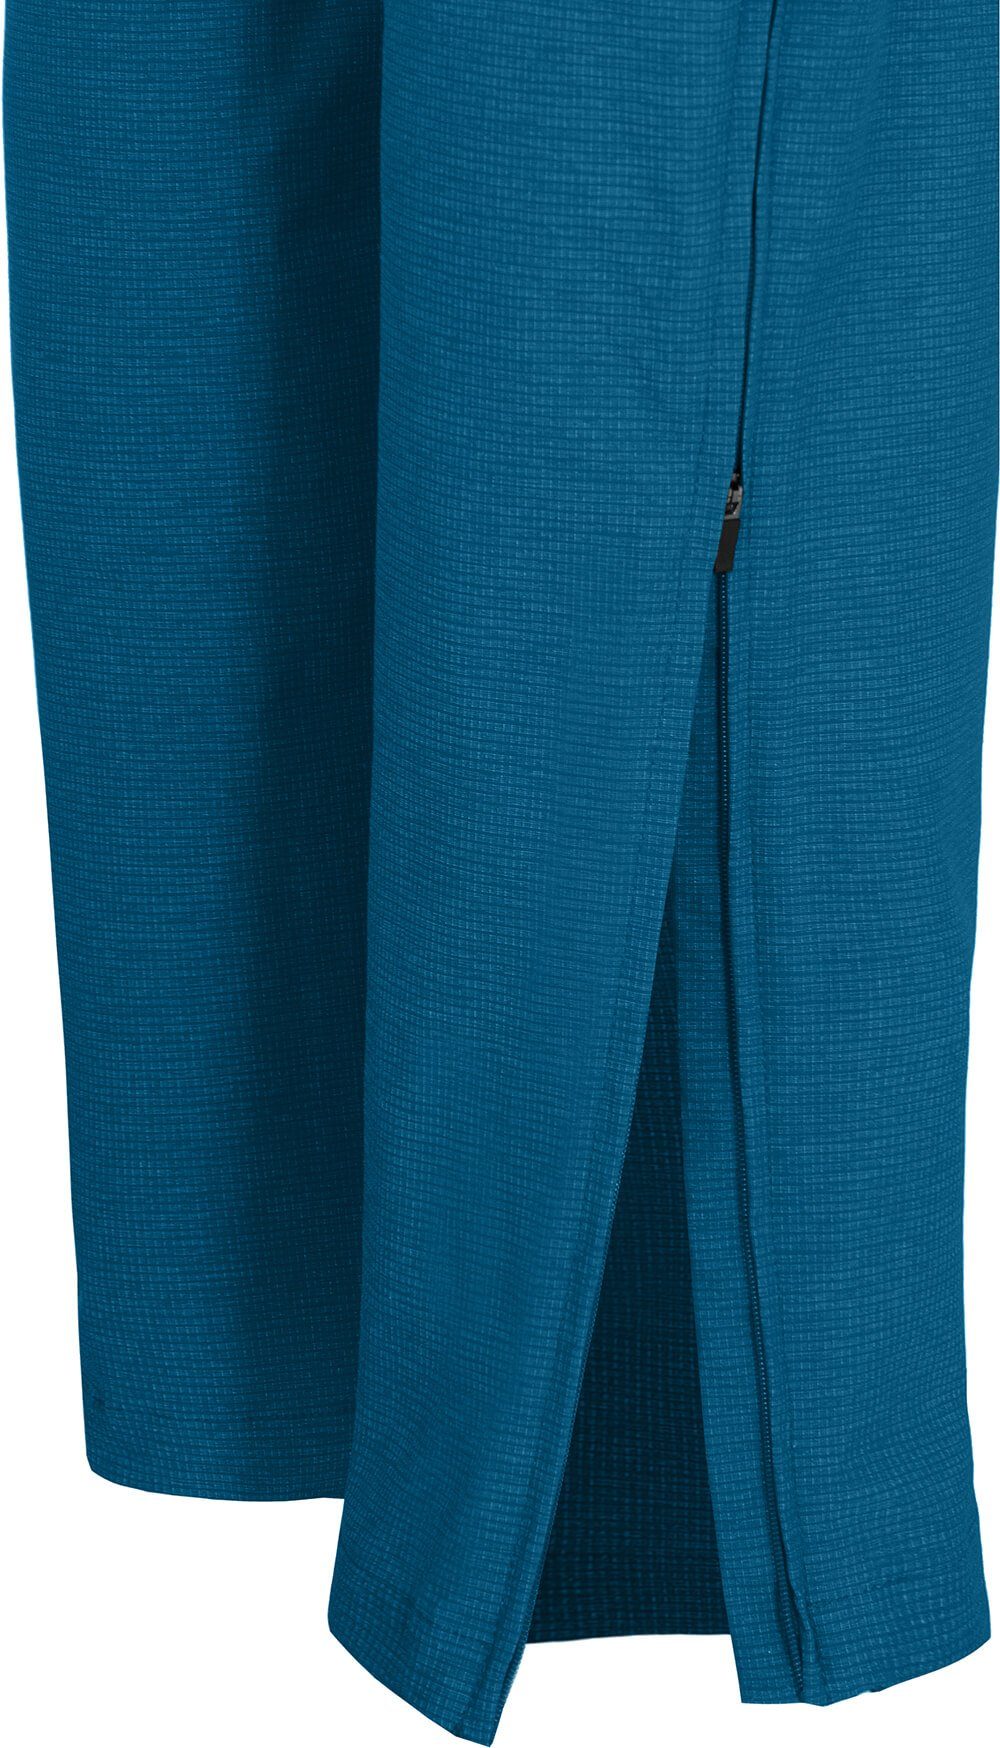 Zip-off-Hose robust Normalgrößen, Wanderhose, Doppel T-ZIPP elastisch, Saphir Zipp-Off PORI Bergson blau Damen mit